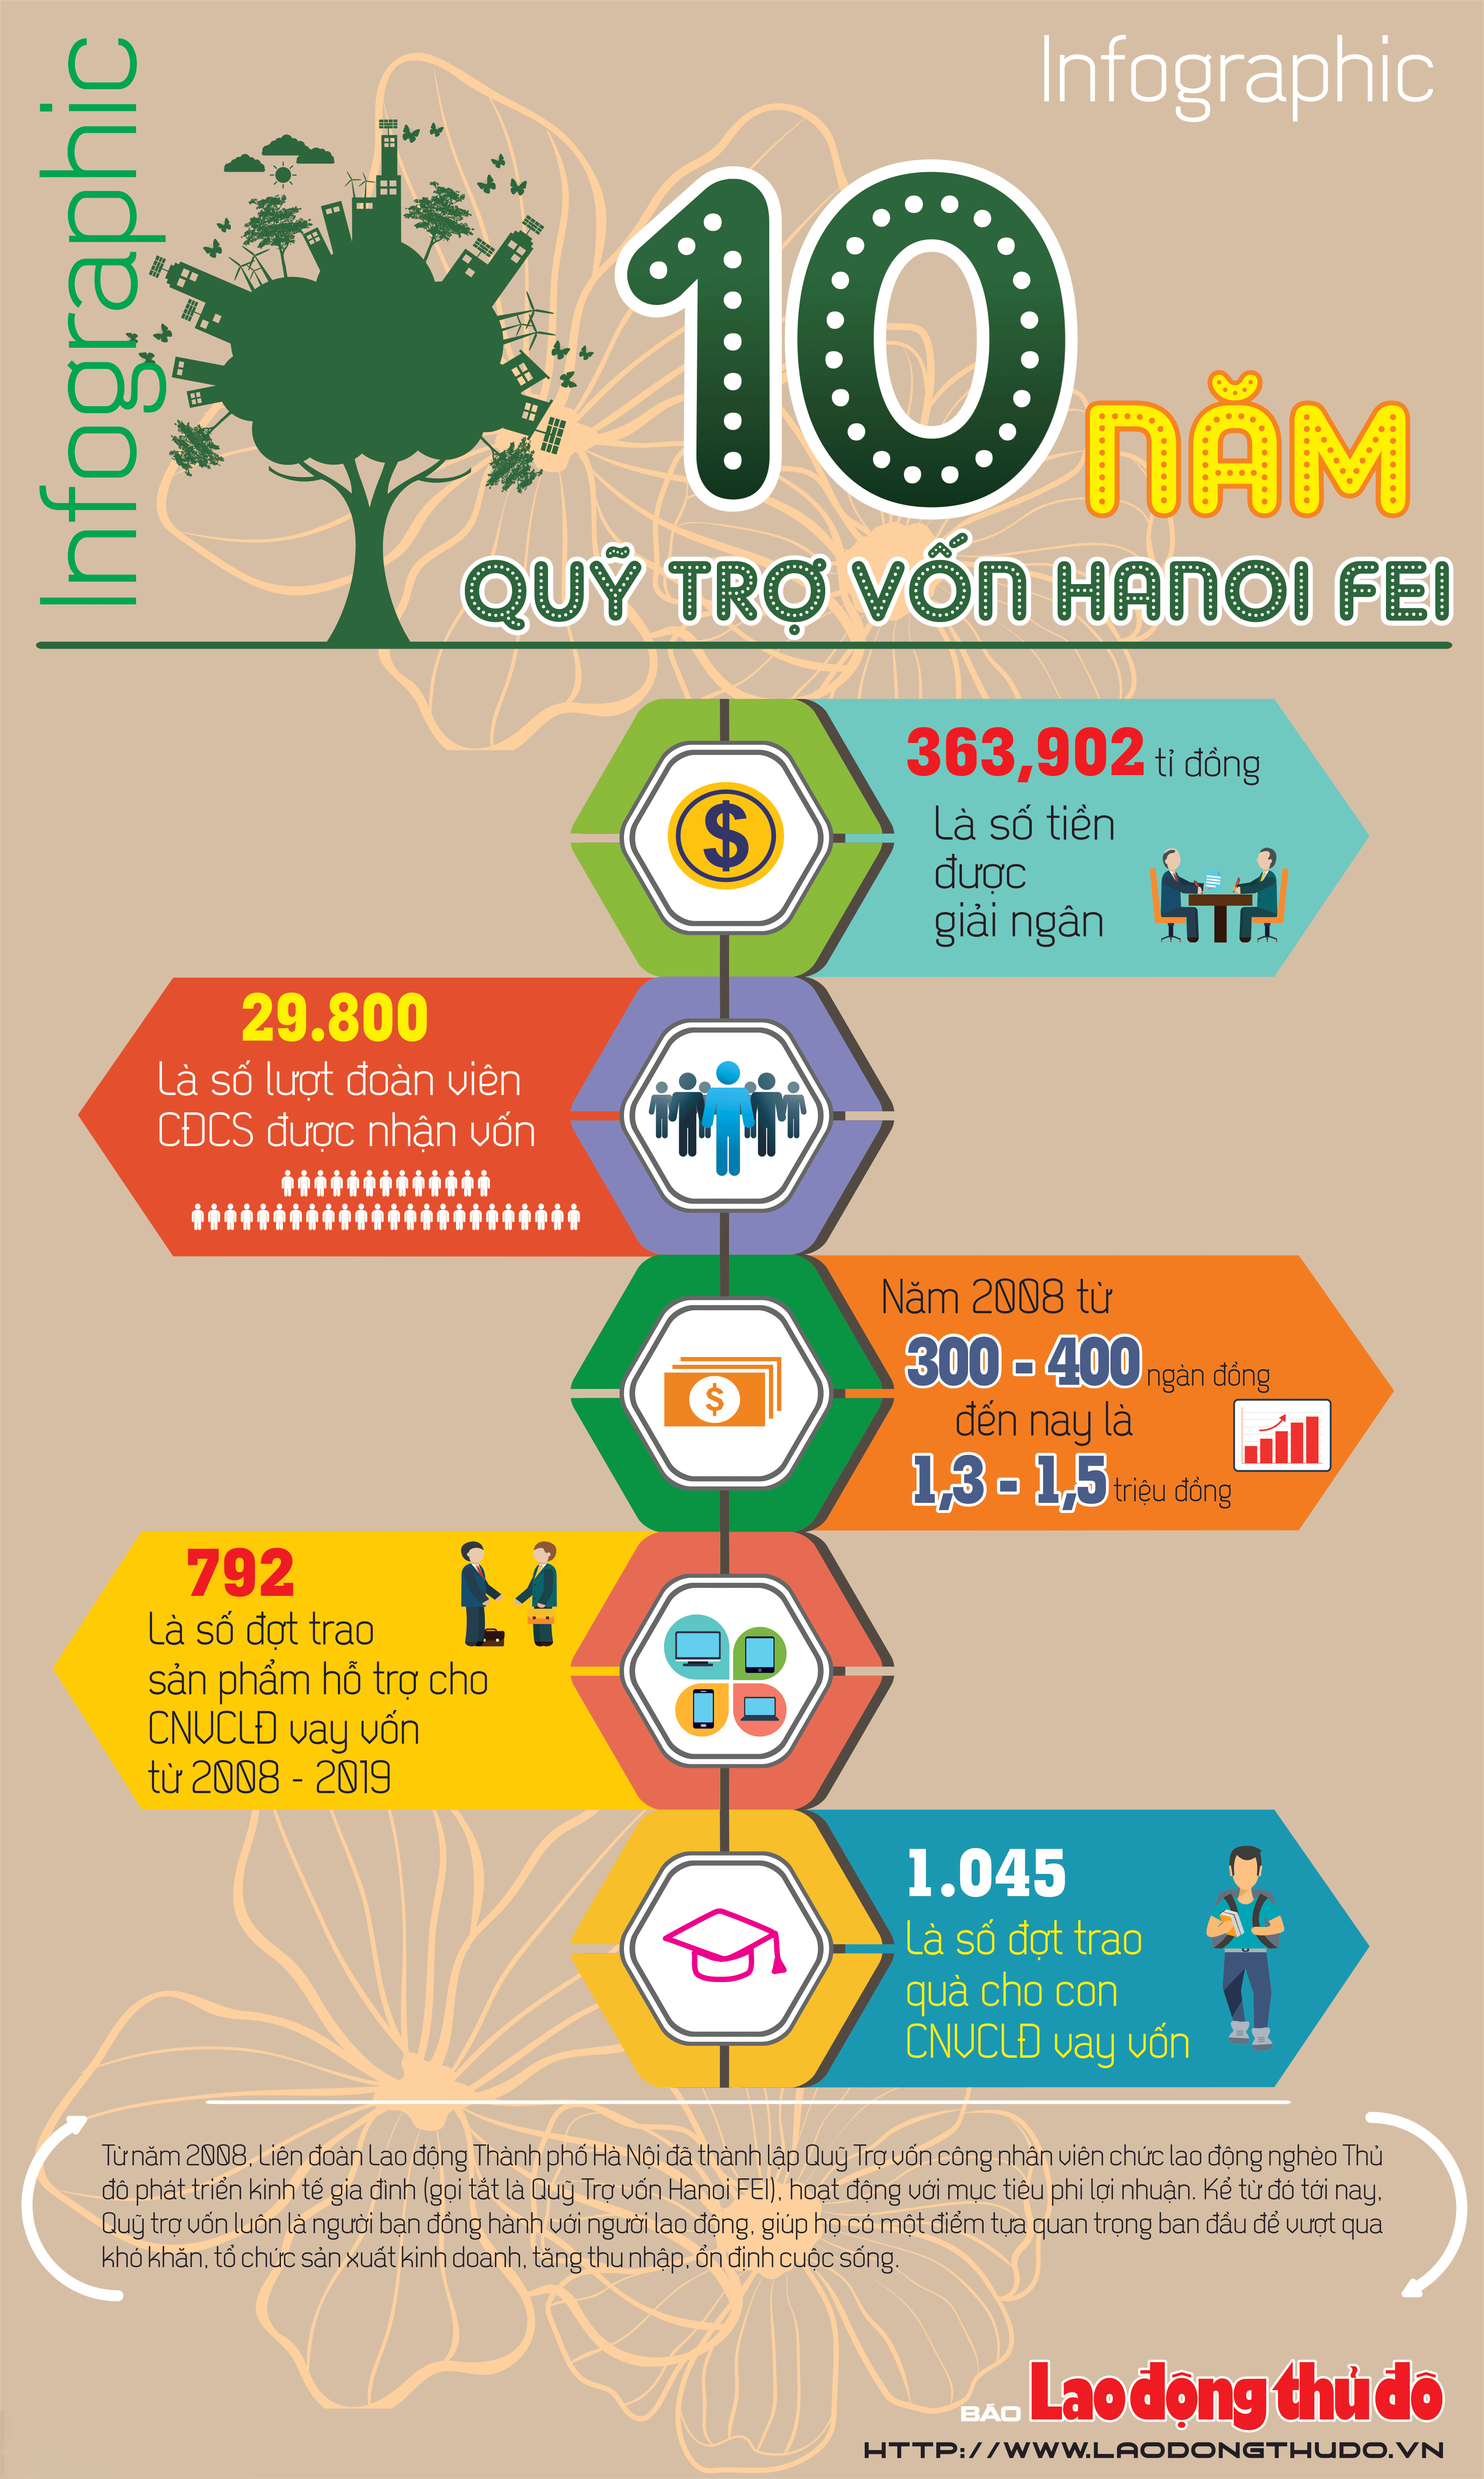 infographic 10 nam quy tro von hanoi fei